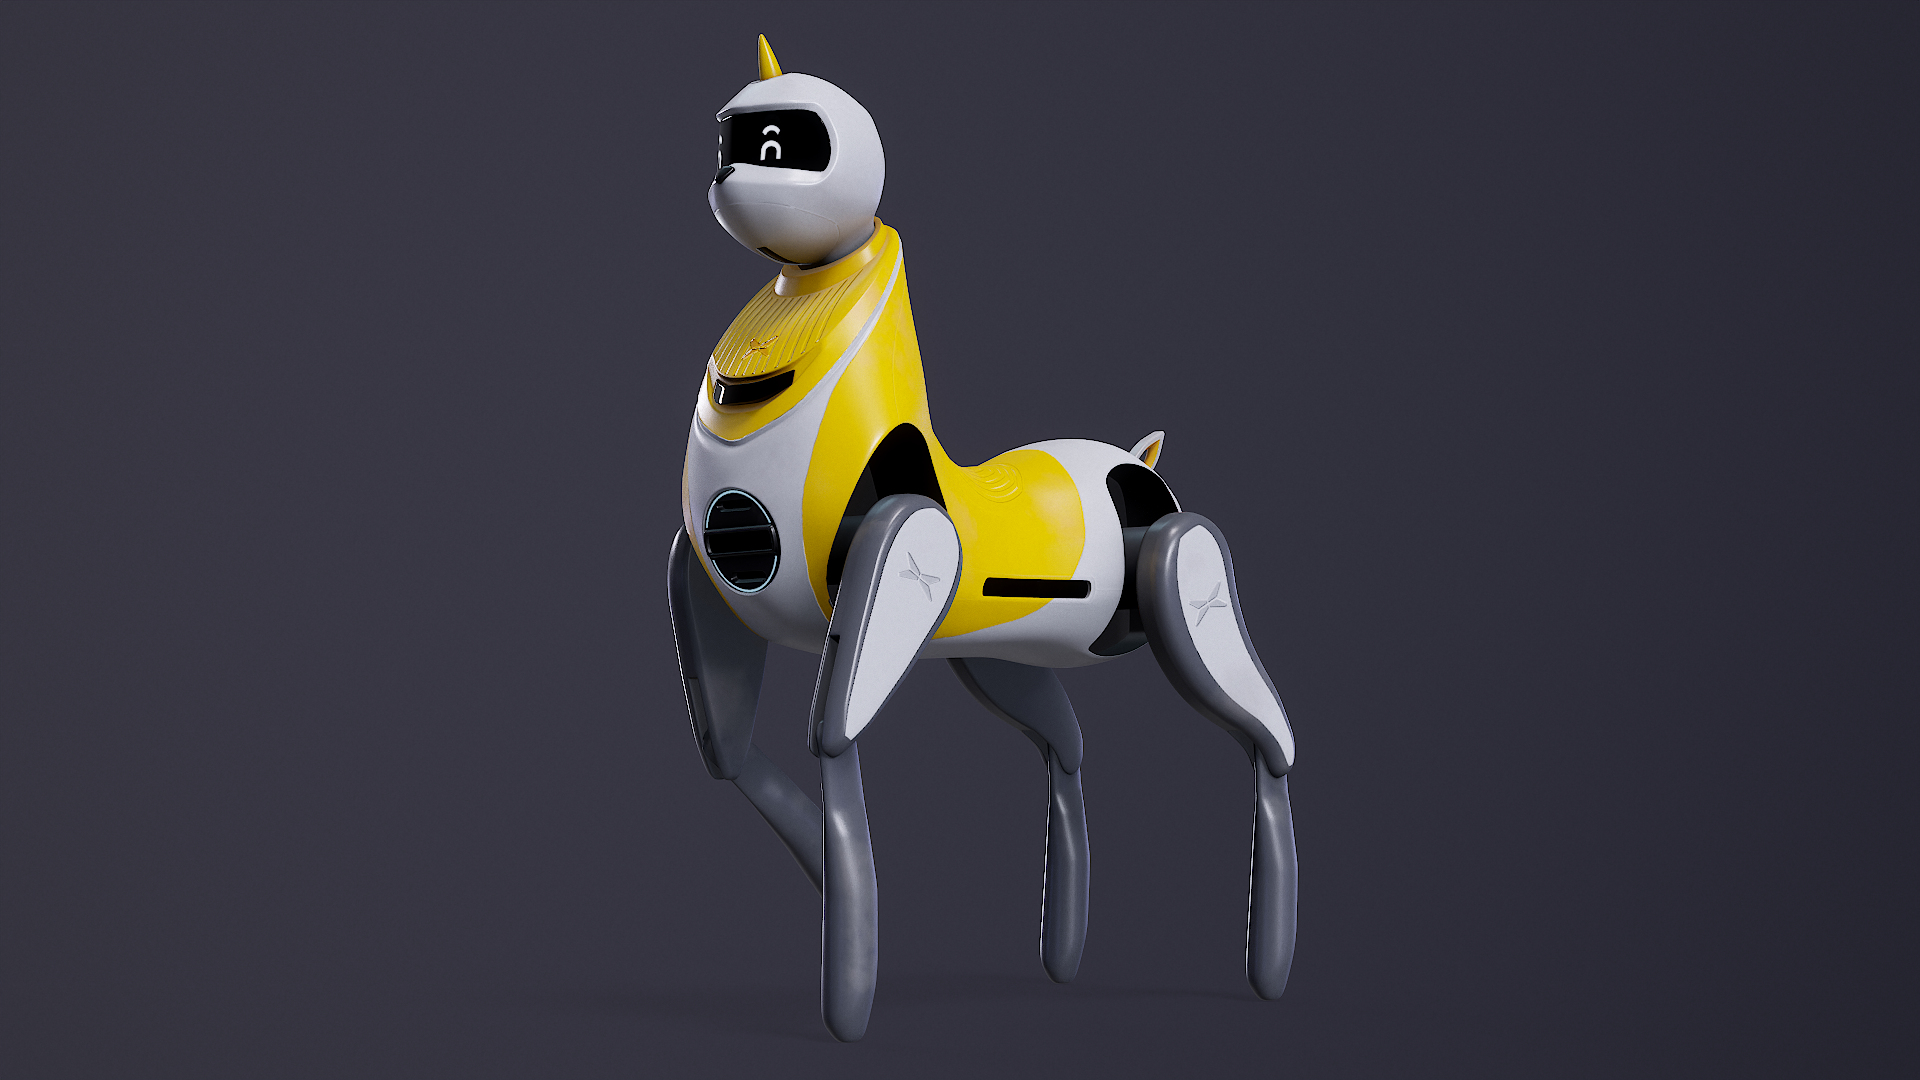 Robot Unicorn XPeng Concept PBR 3D https://p.turbosquid.com/ts-thumb/bi/CeyfNc/jw/00/png/1634429045/1920x1080/turn_fit_q99/57d98f009e542ca44dba8587af9d08612c9592d3/00-1.jpg